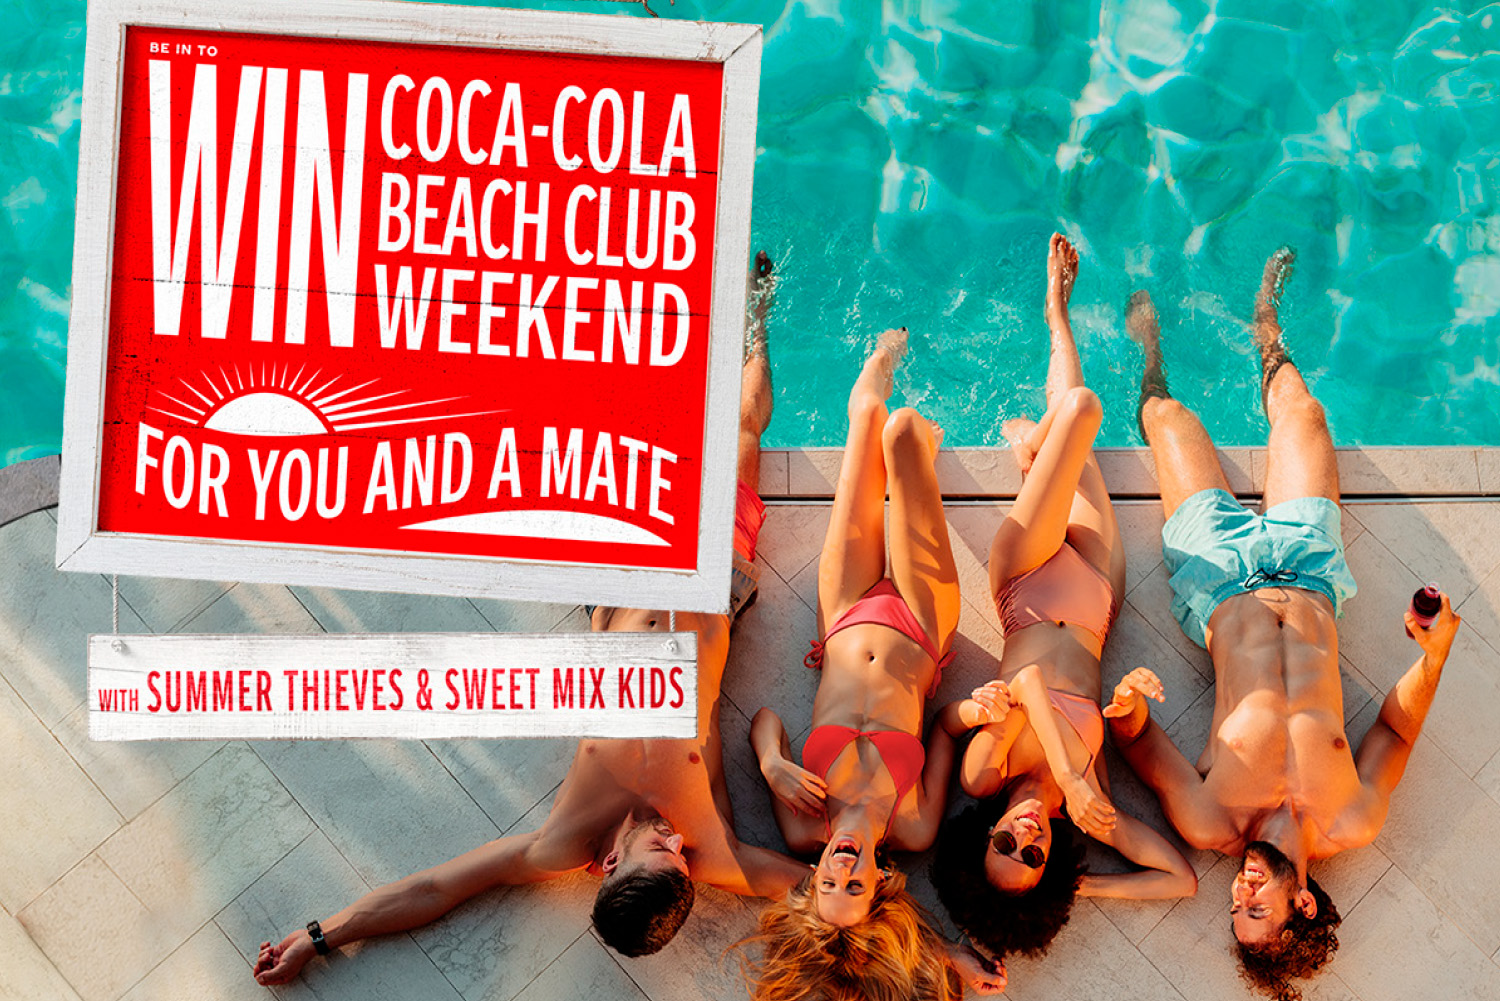 Coca-Cola Beach Club